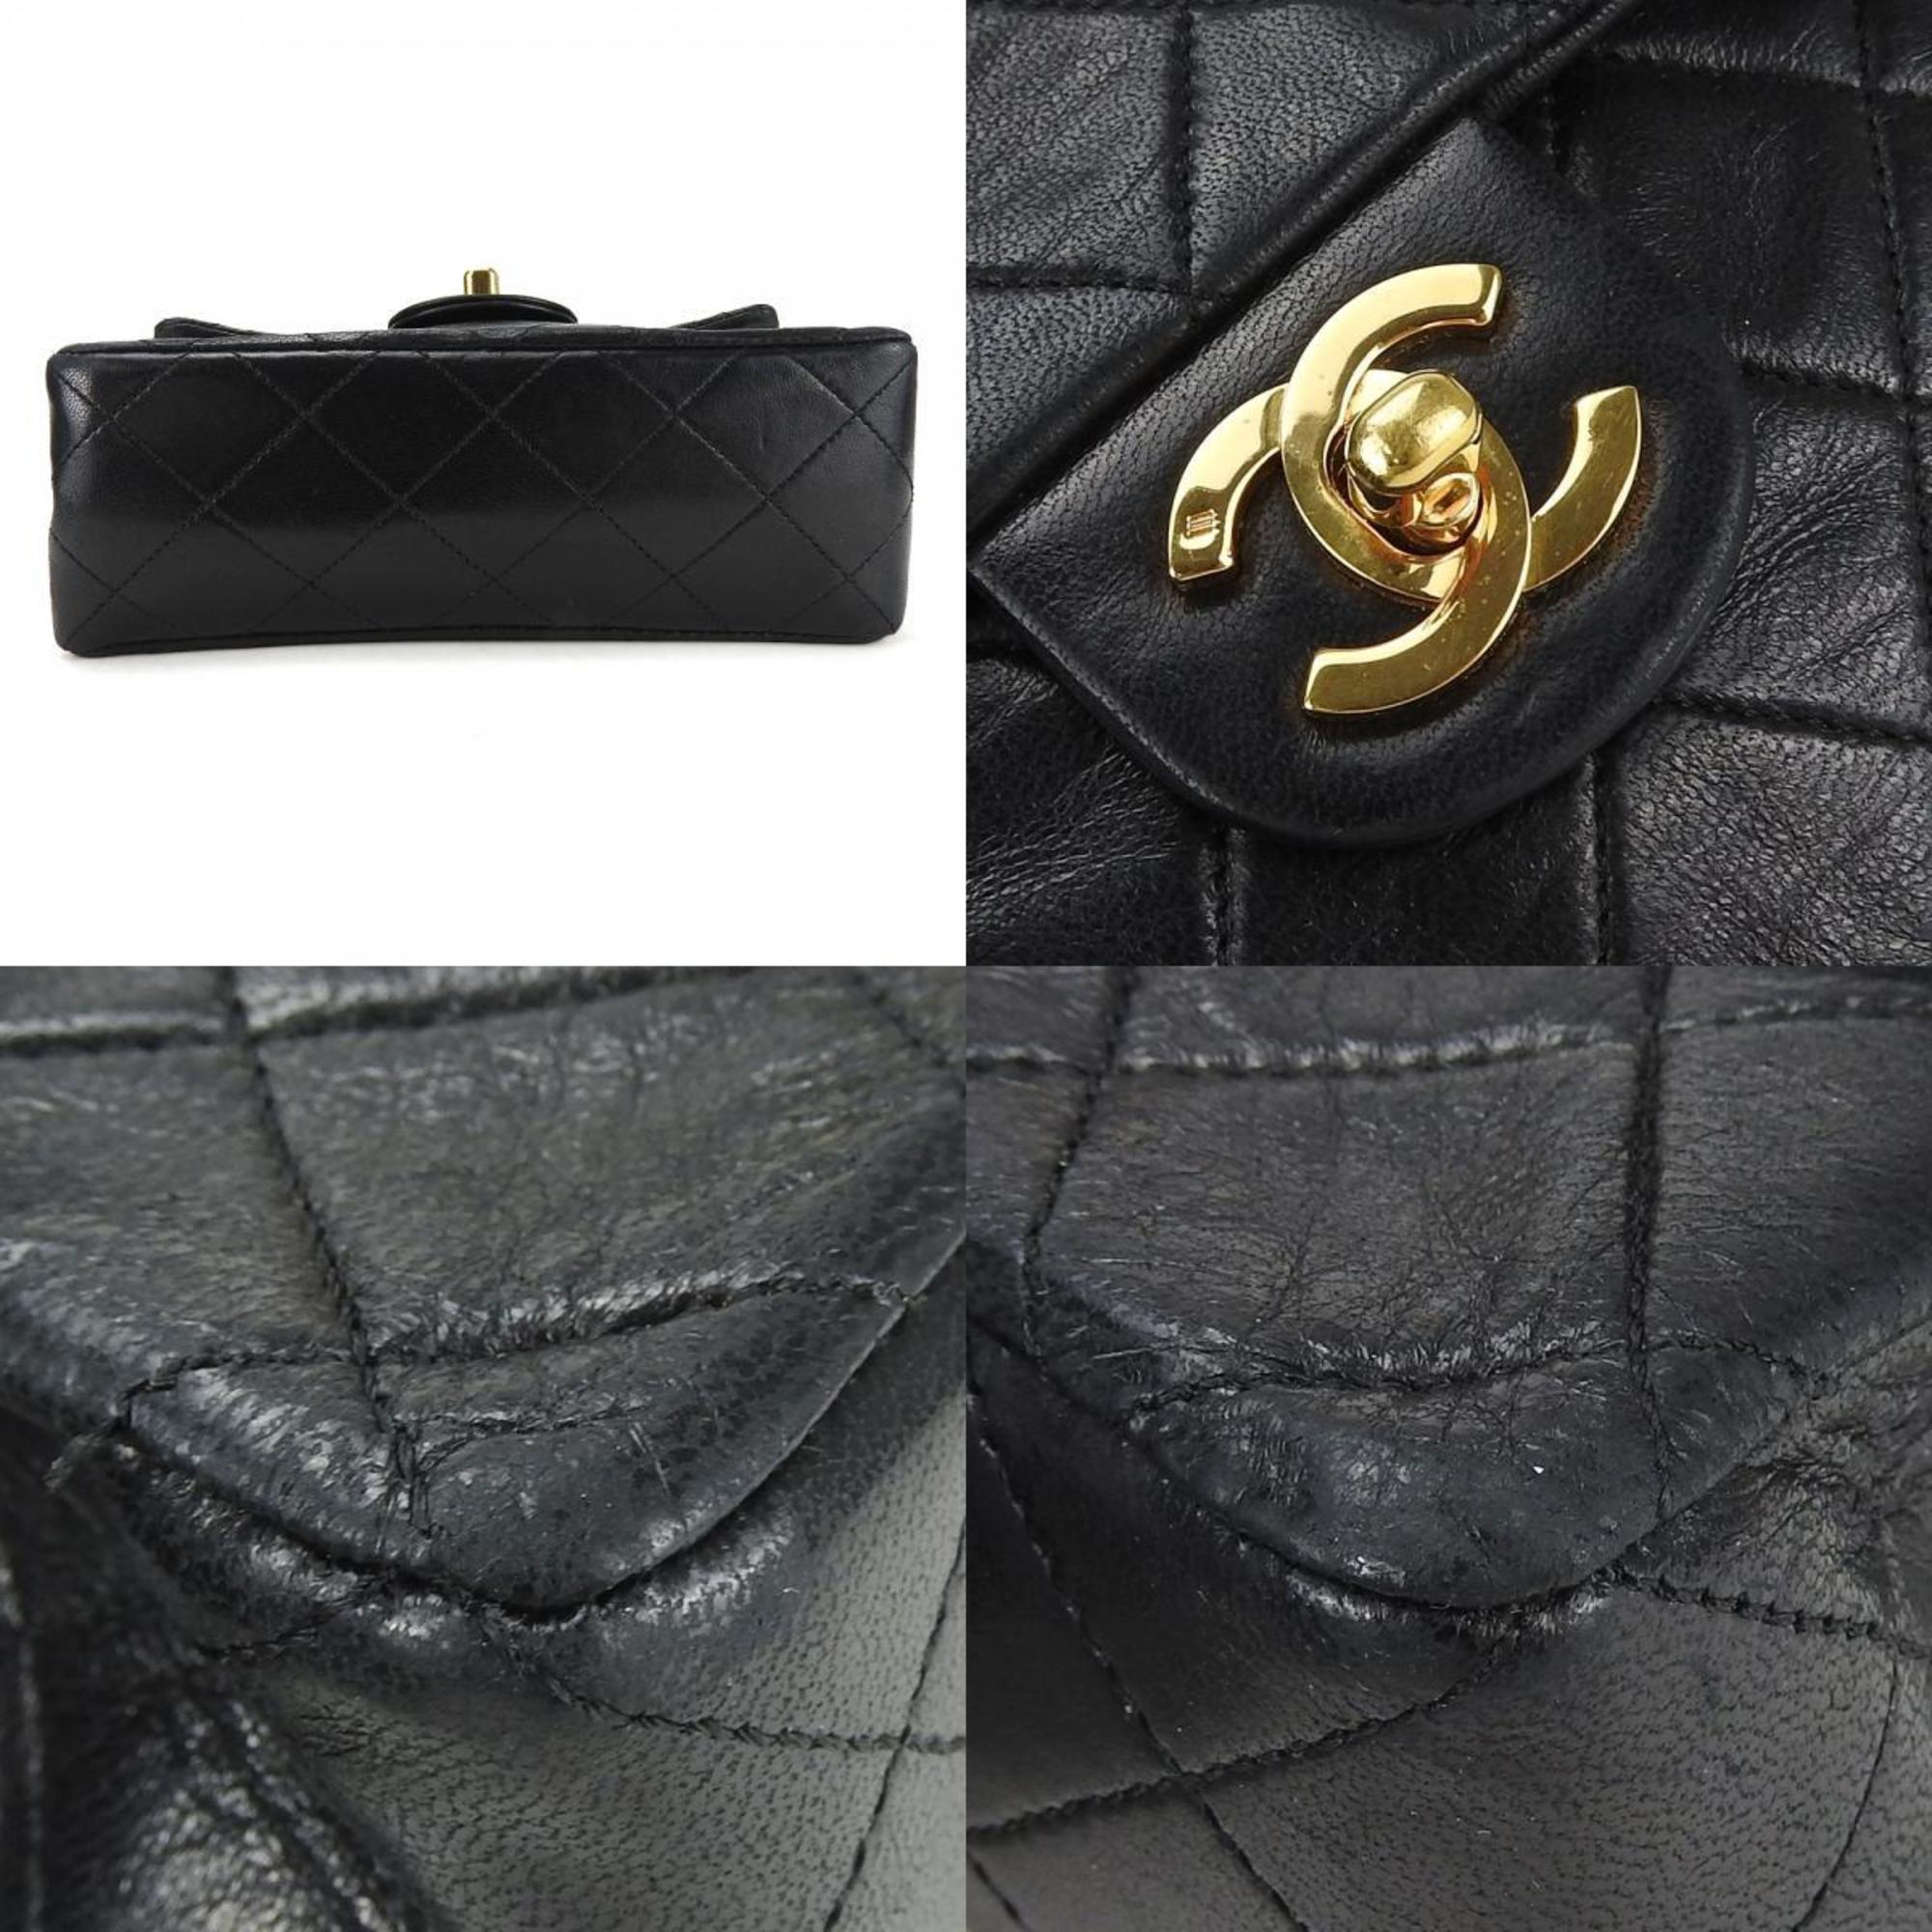 Chanel Shoulder Bag Matelasse Lambskin Black Chain Coco Mark Women's CHANEL